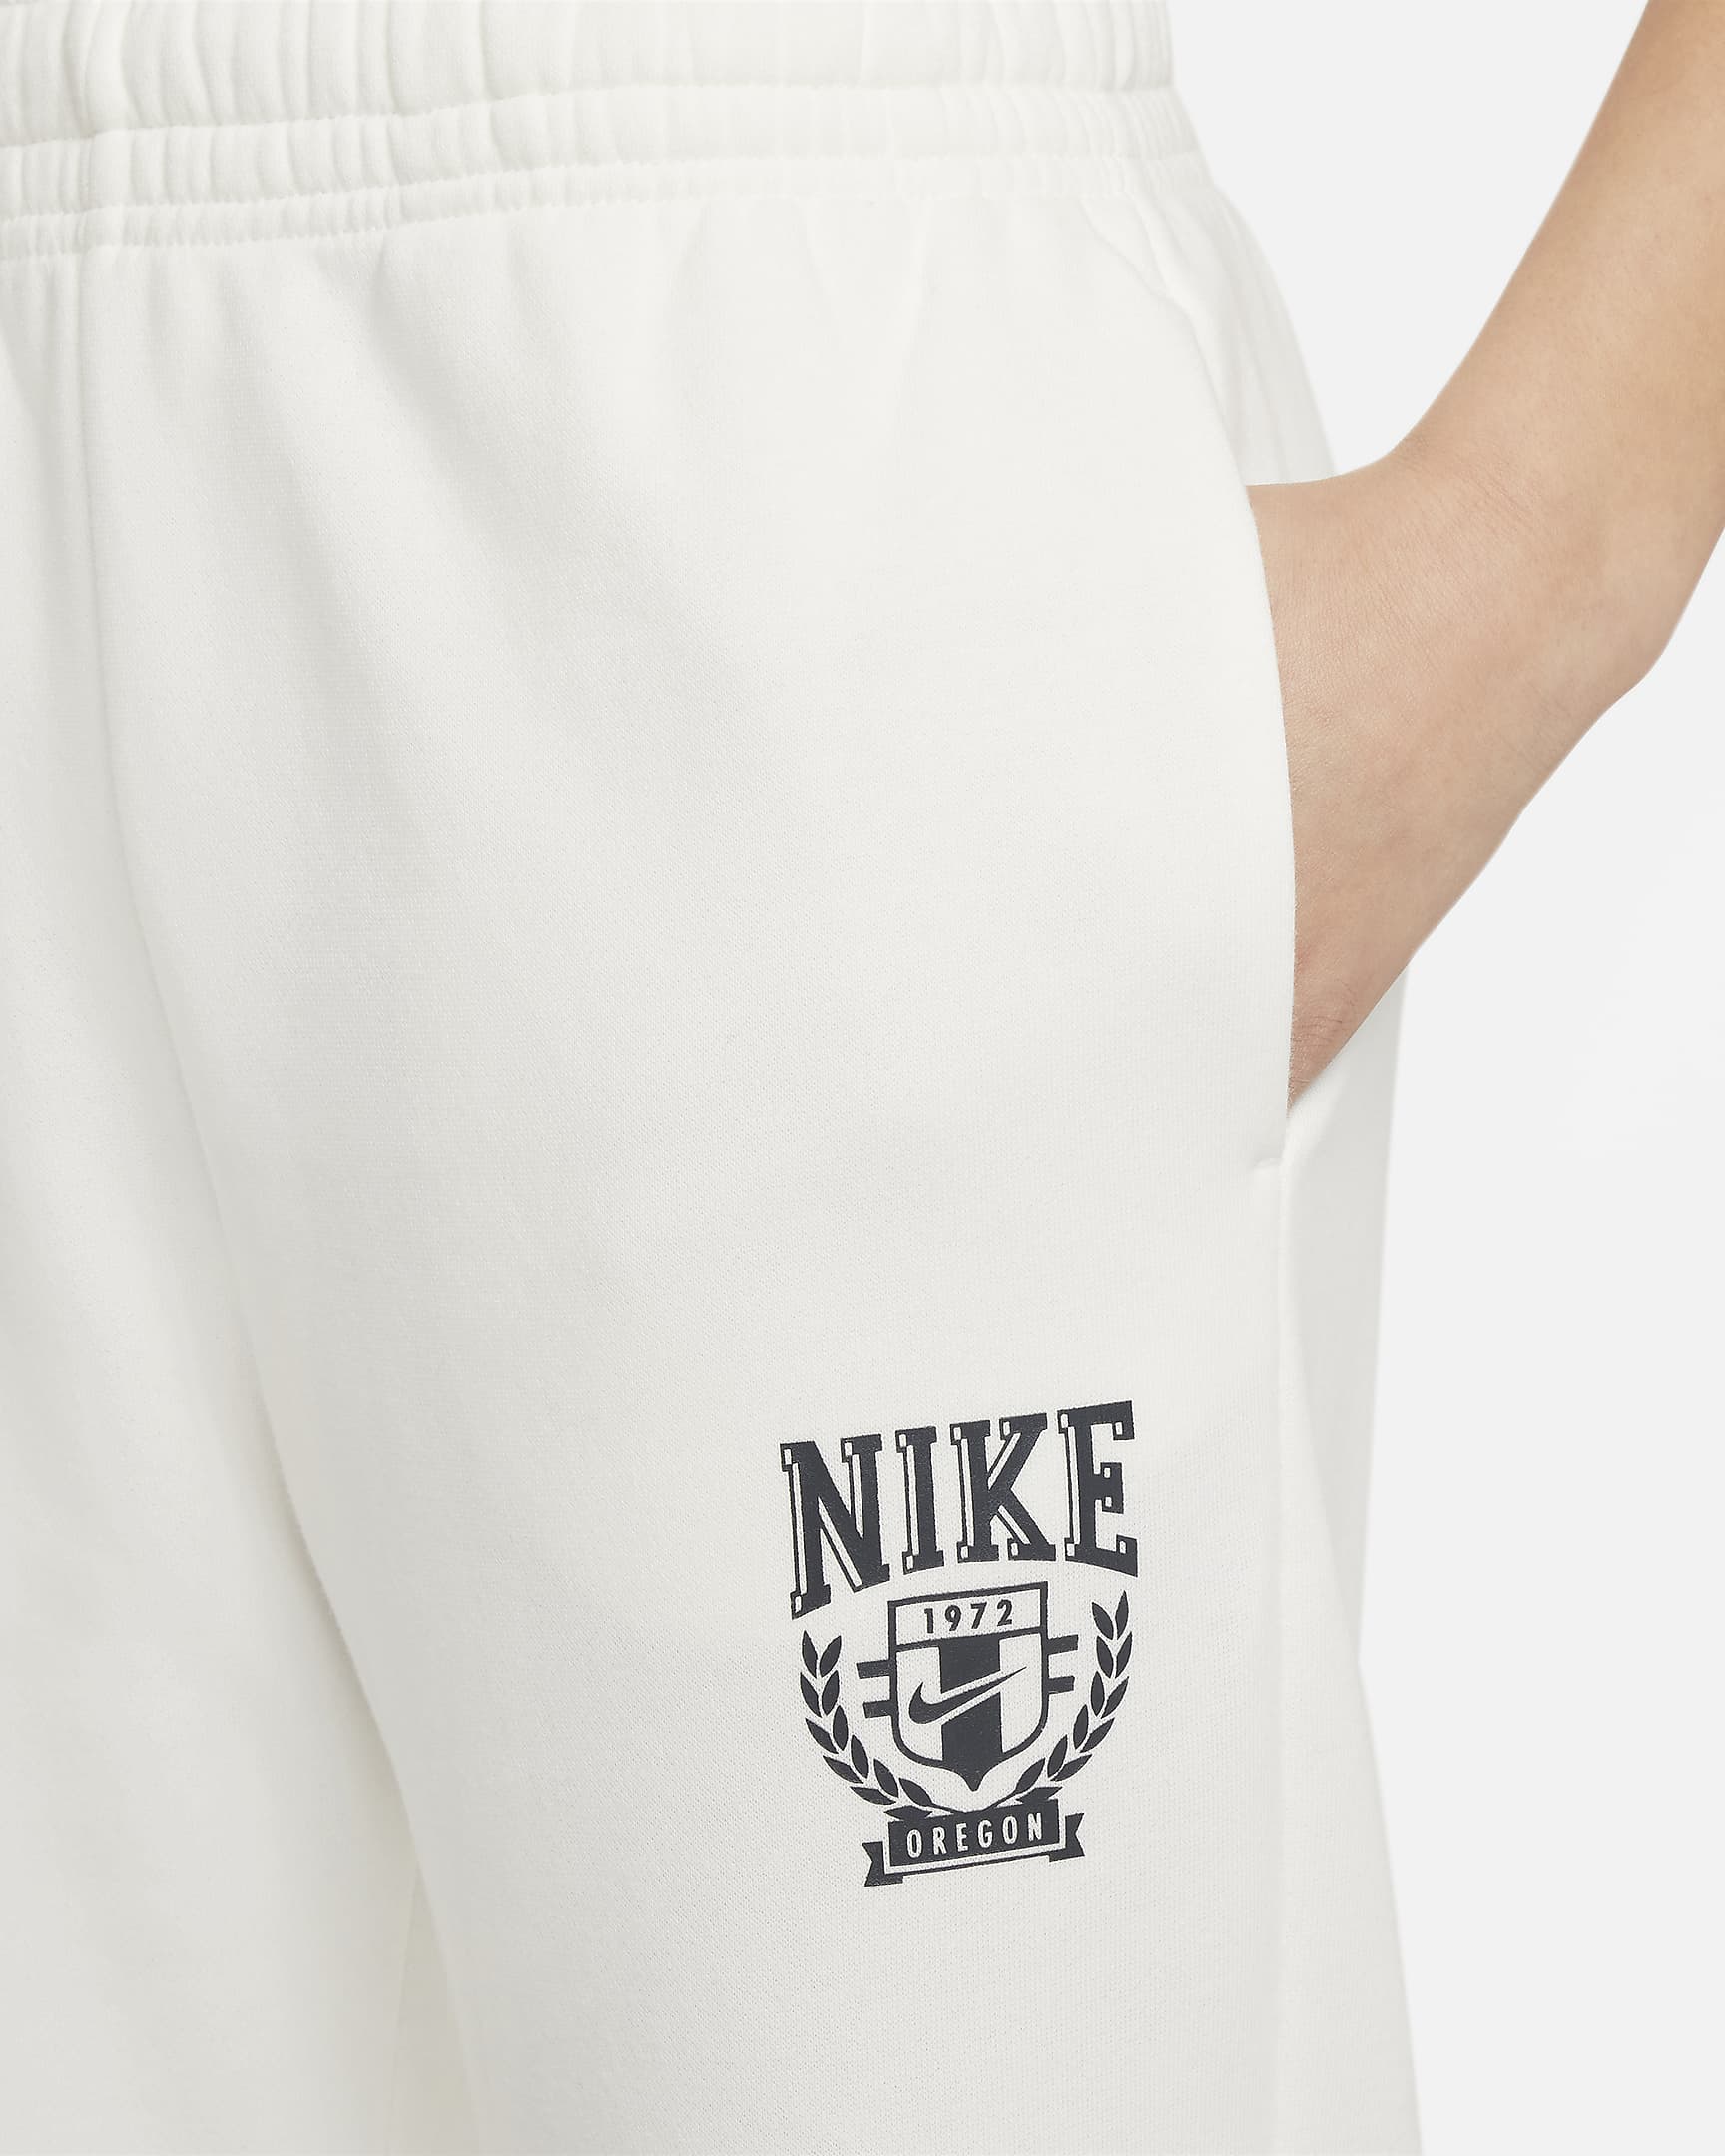 Pantaloni oversize in fleece Nike Sportswear – Ragazza - Sail